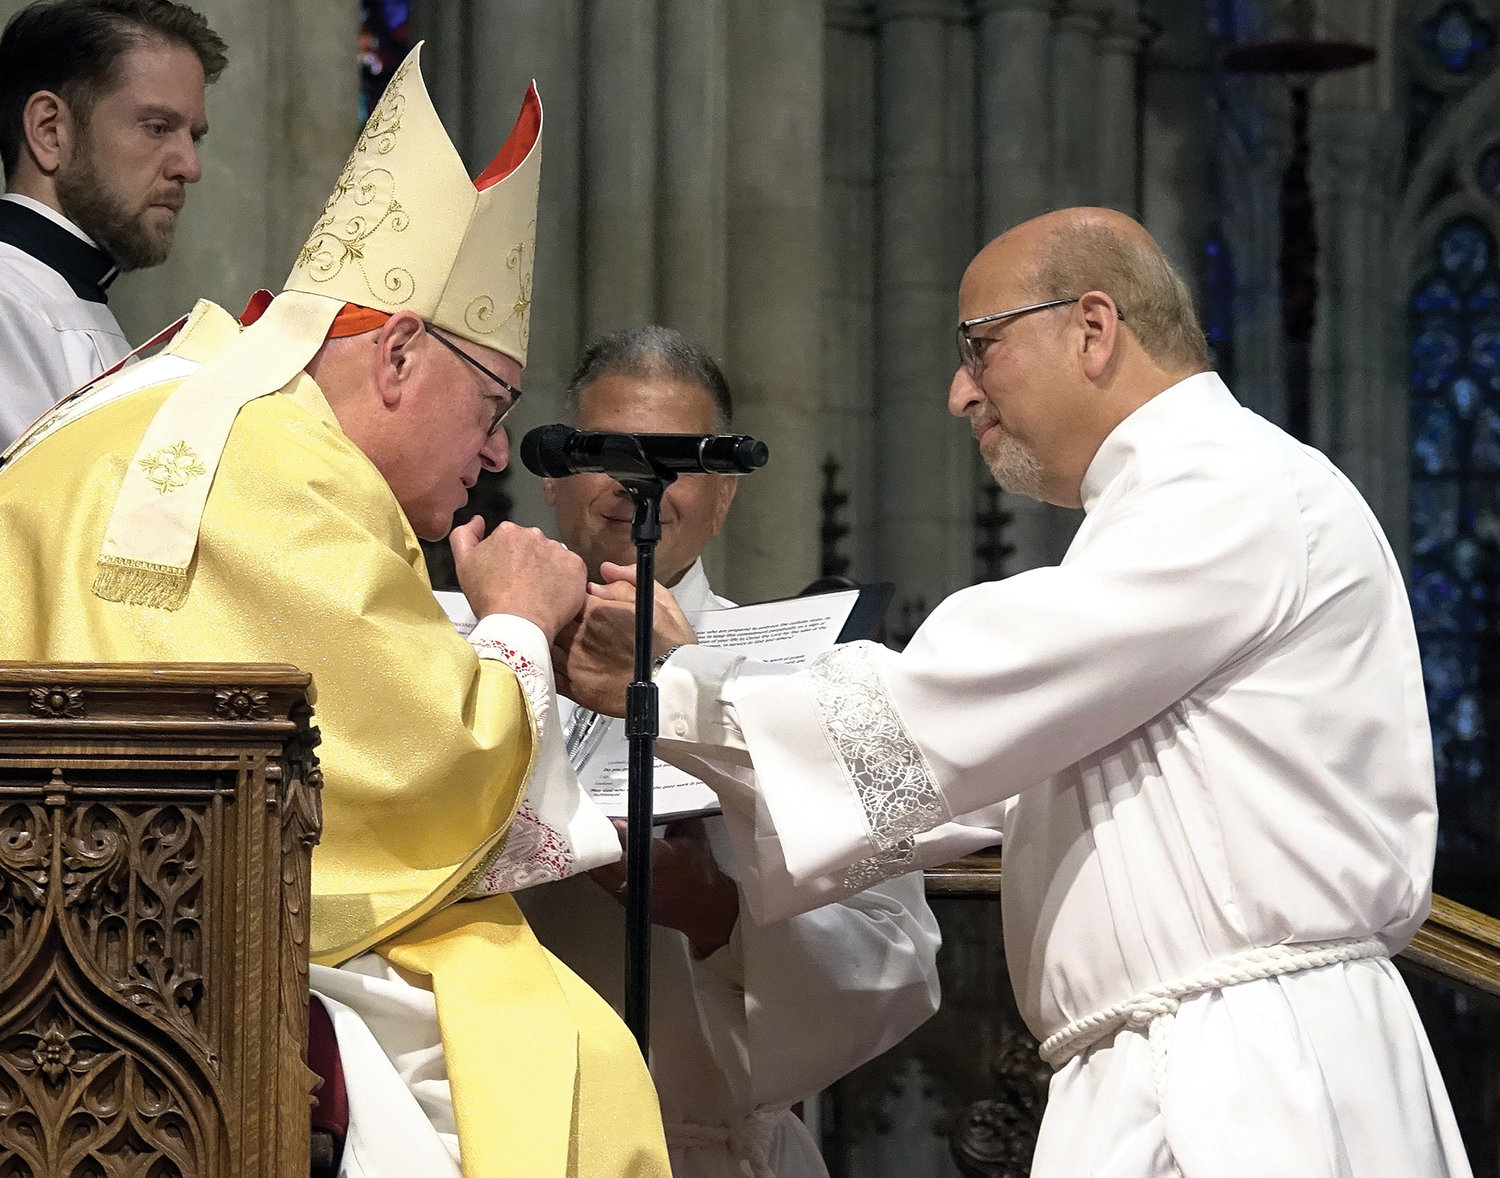 Cardinal Dolan grasps the hands of Deacon Paul Reisman during the Rite of Ordination June 18.